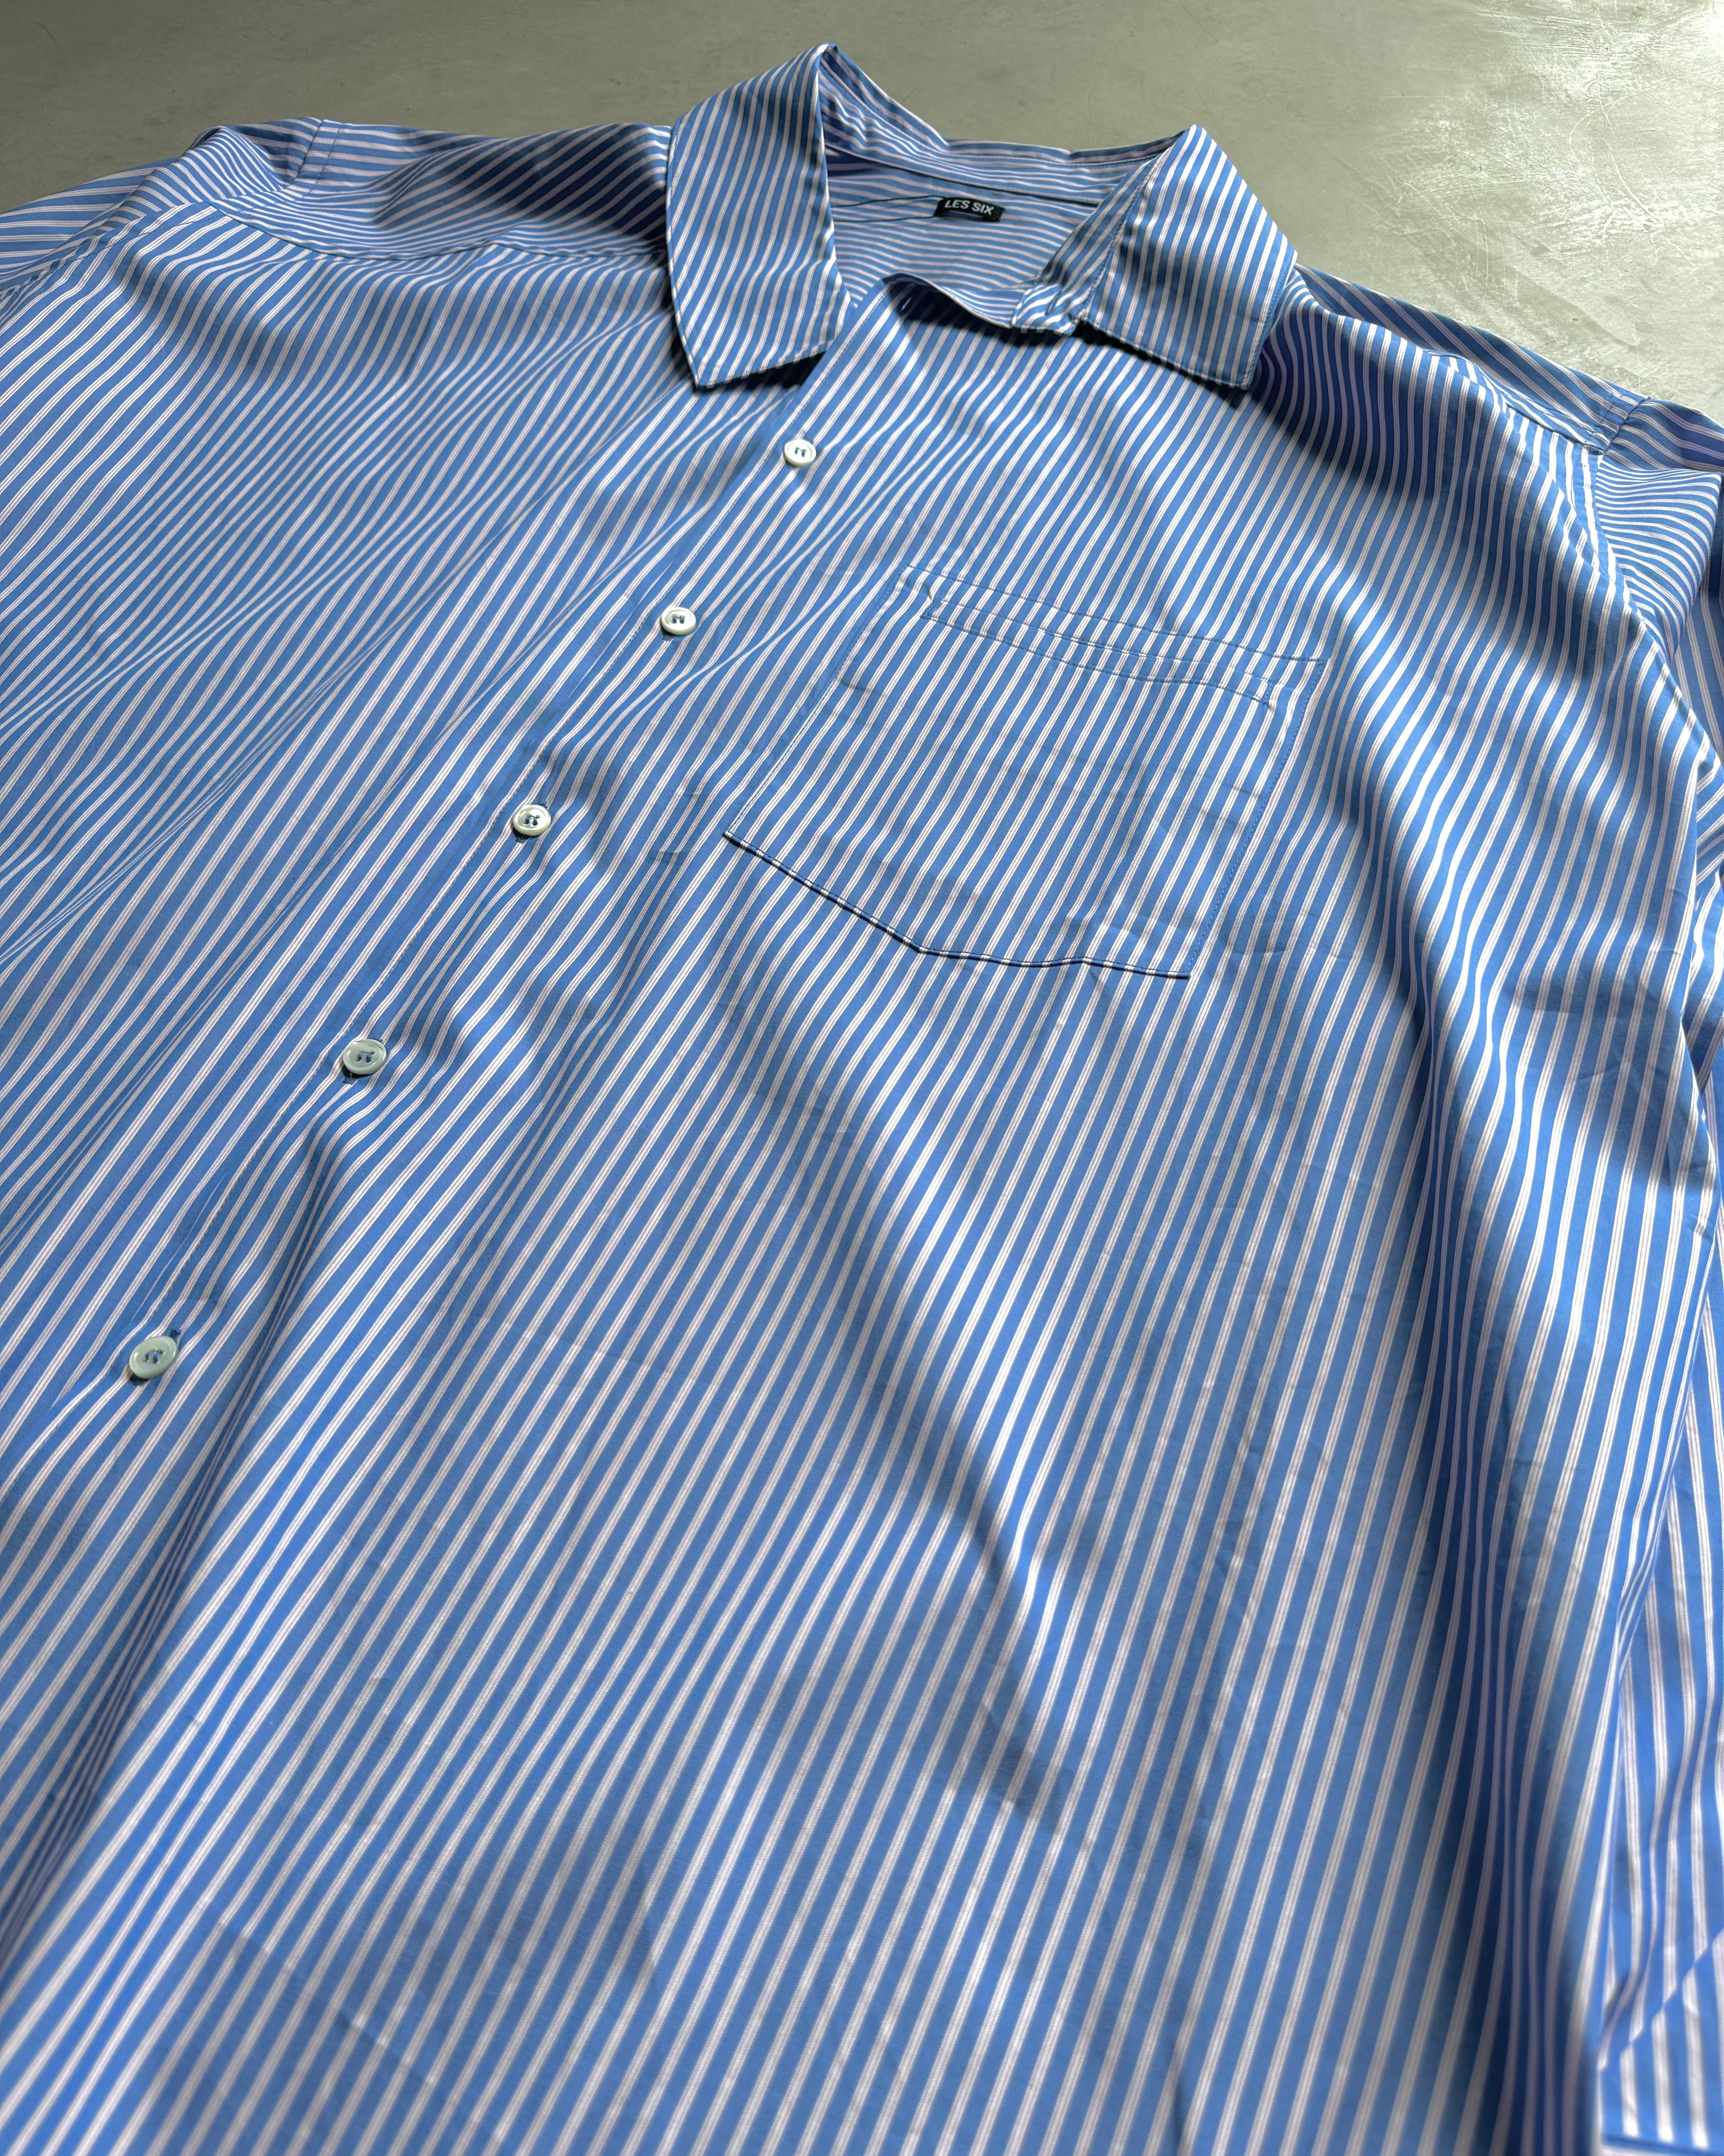 LES SIX / distorted shirt - blue stripe